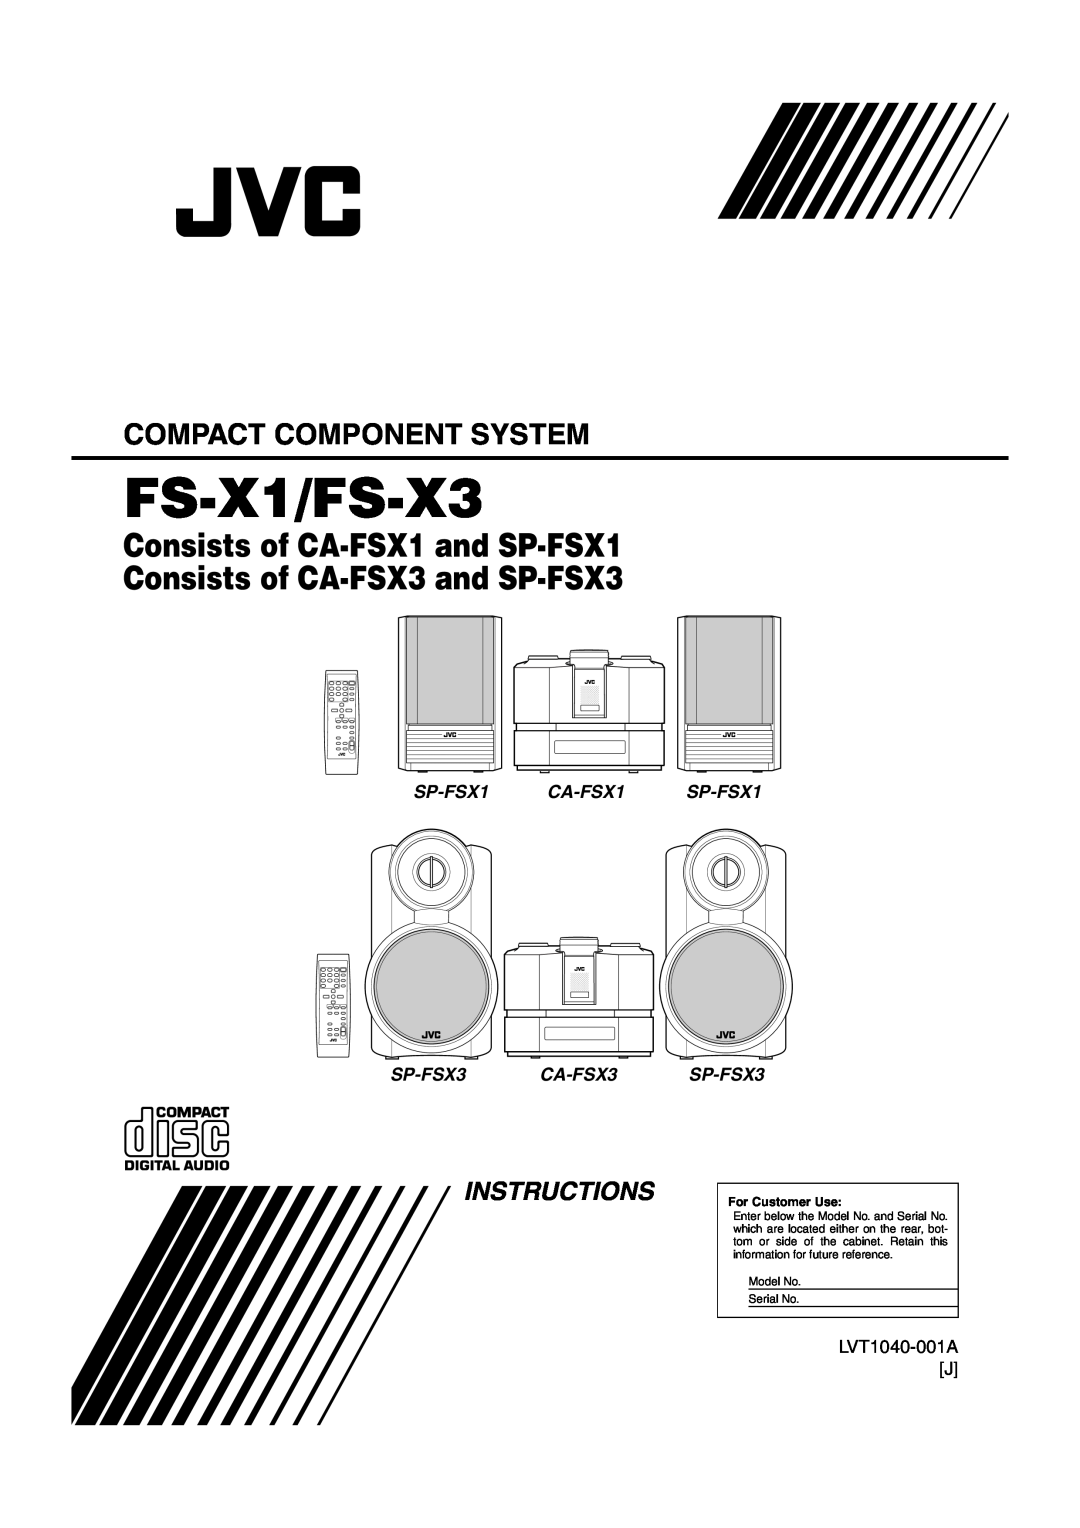 JVC FS-X1/FS-X3 manual Compact Component System, SP-FSX1 CA-FSX1 SP-FSX1 SP-FSX3 CA-FSX3 SP-FSX3, LVT1040-001A J, Model No 